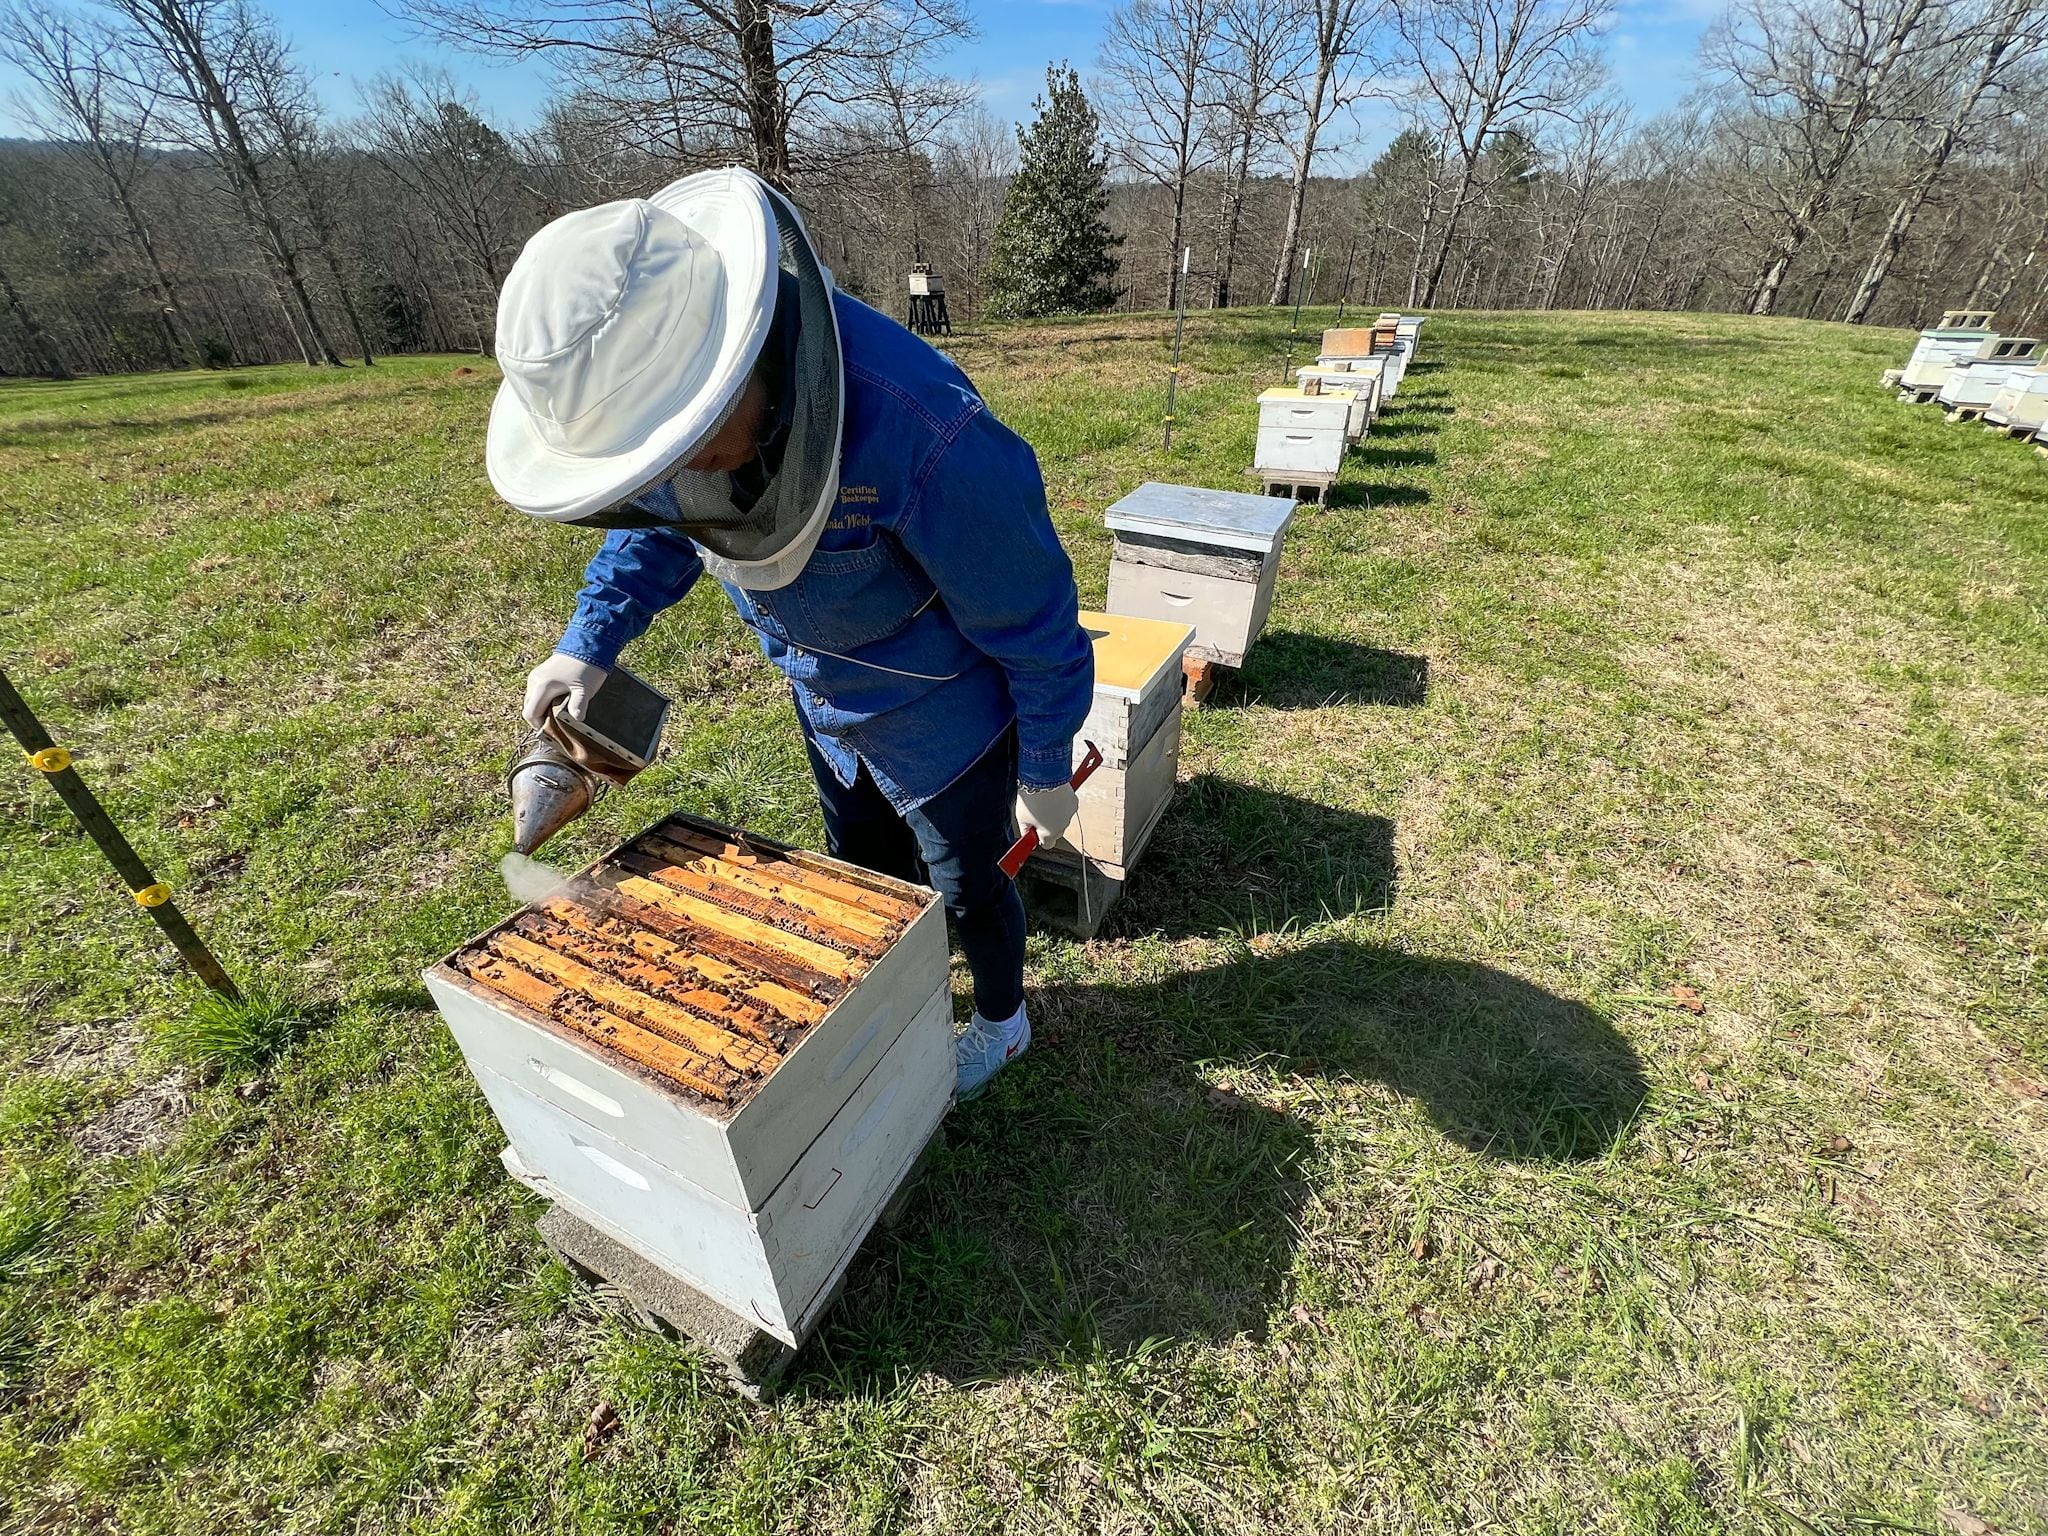 Do Women Make Better Beekeepers? – Savannah Bee Company